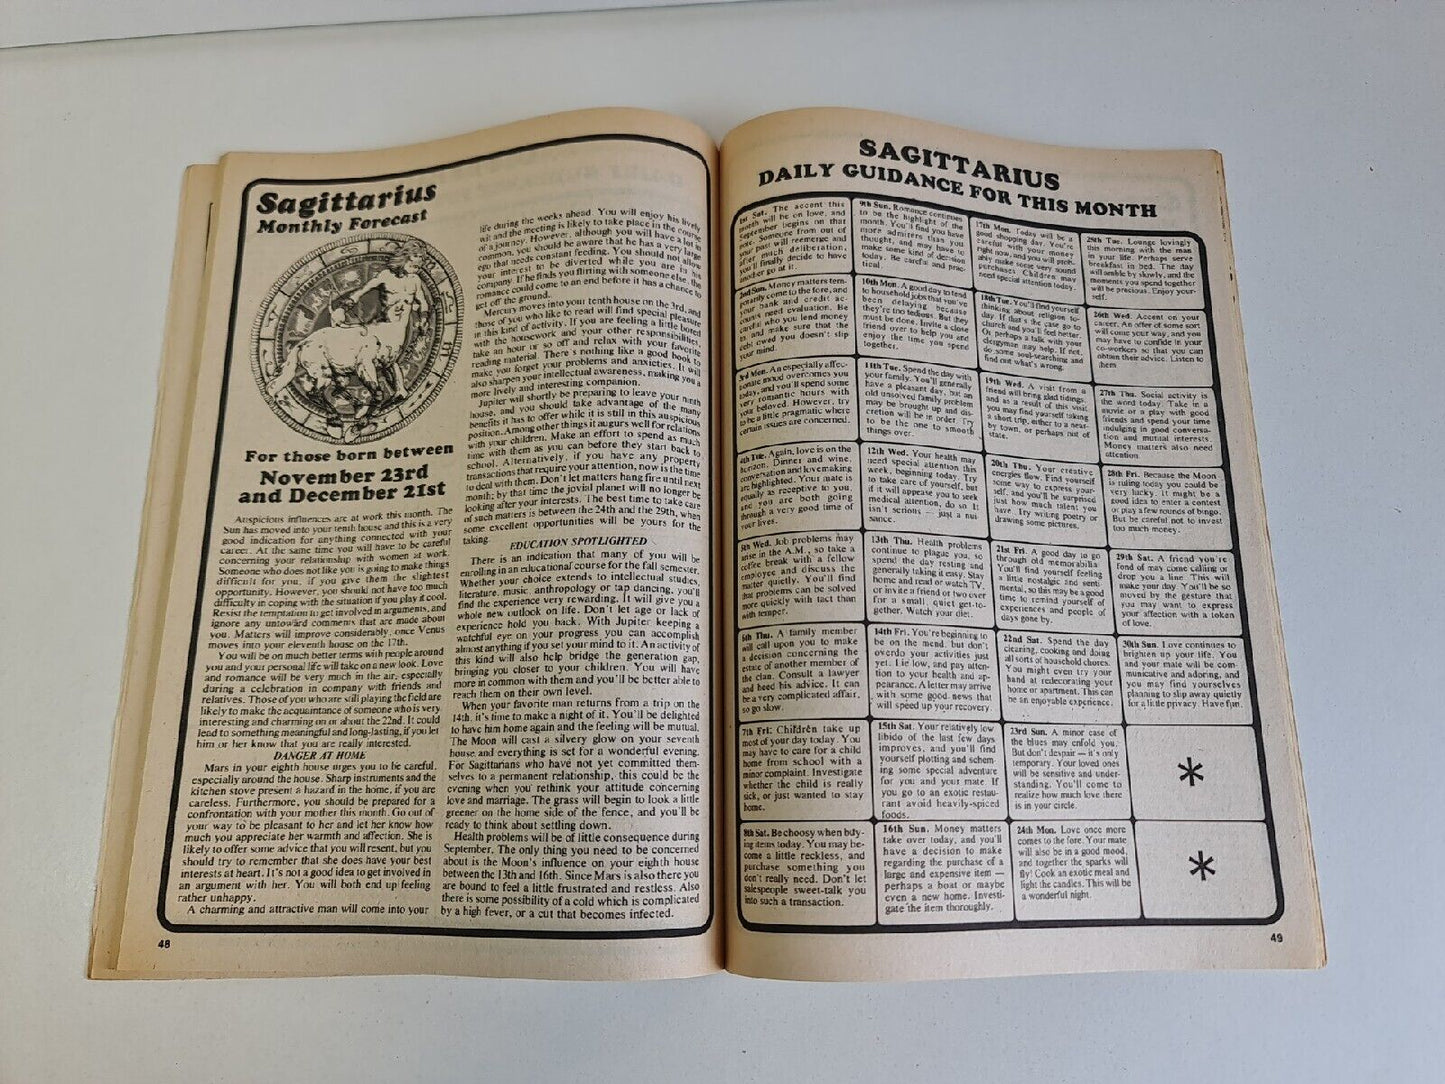 Midnight Horoscope Magazine - September 1979